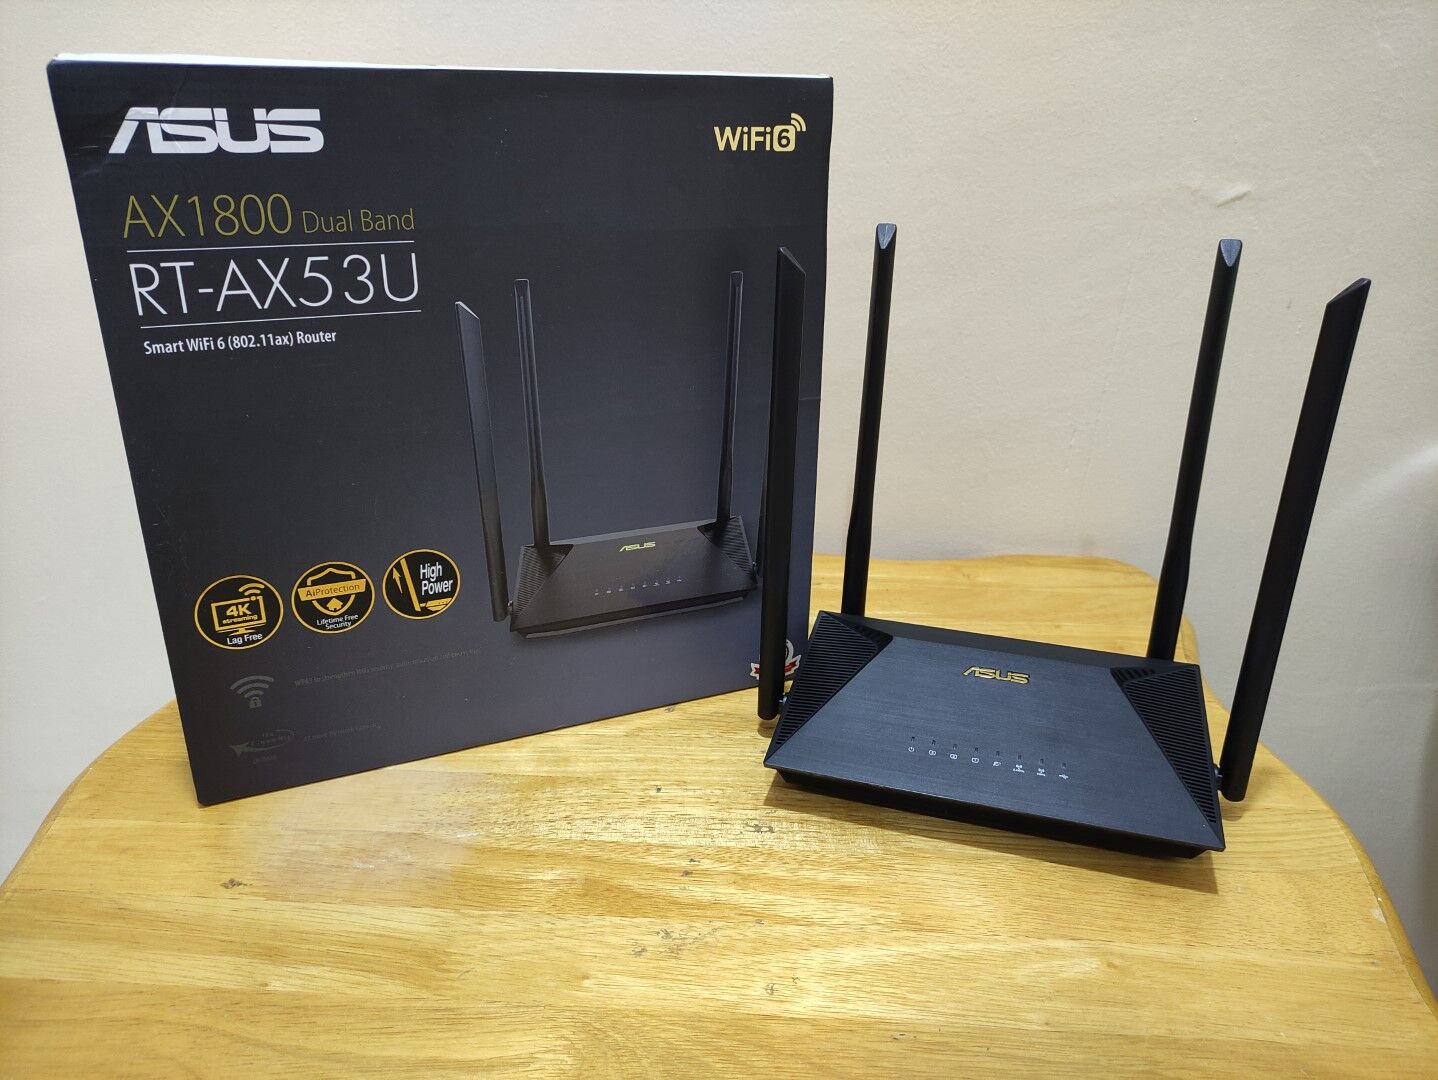 ASUS RT-AX53U AX1800 Dual Band Router Review 33